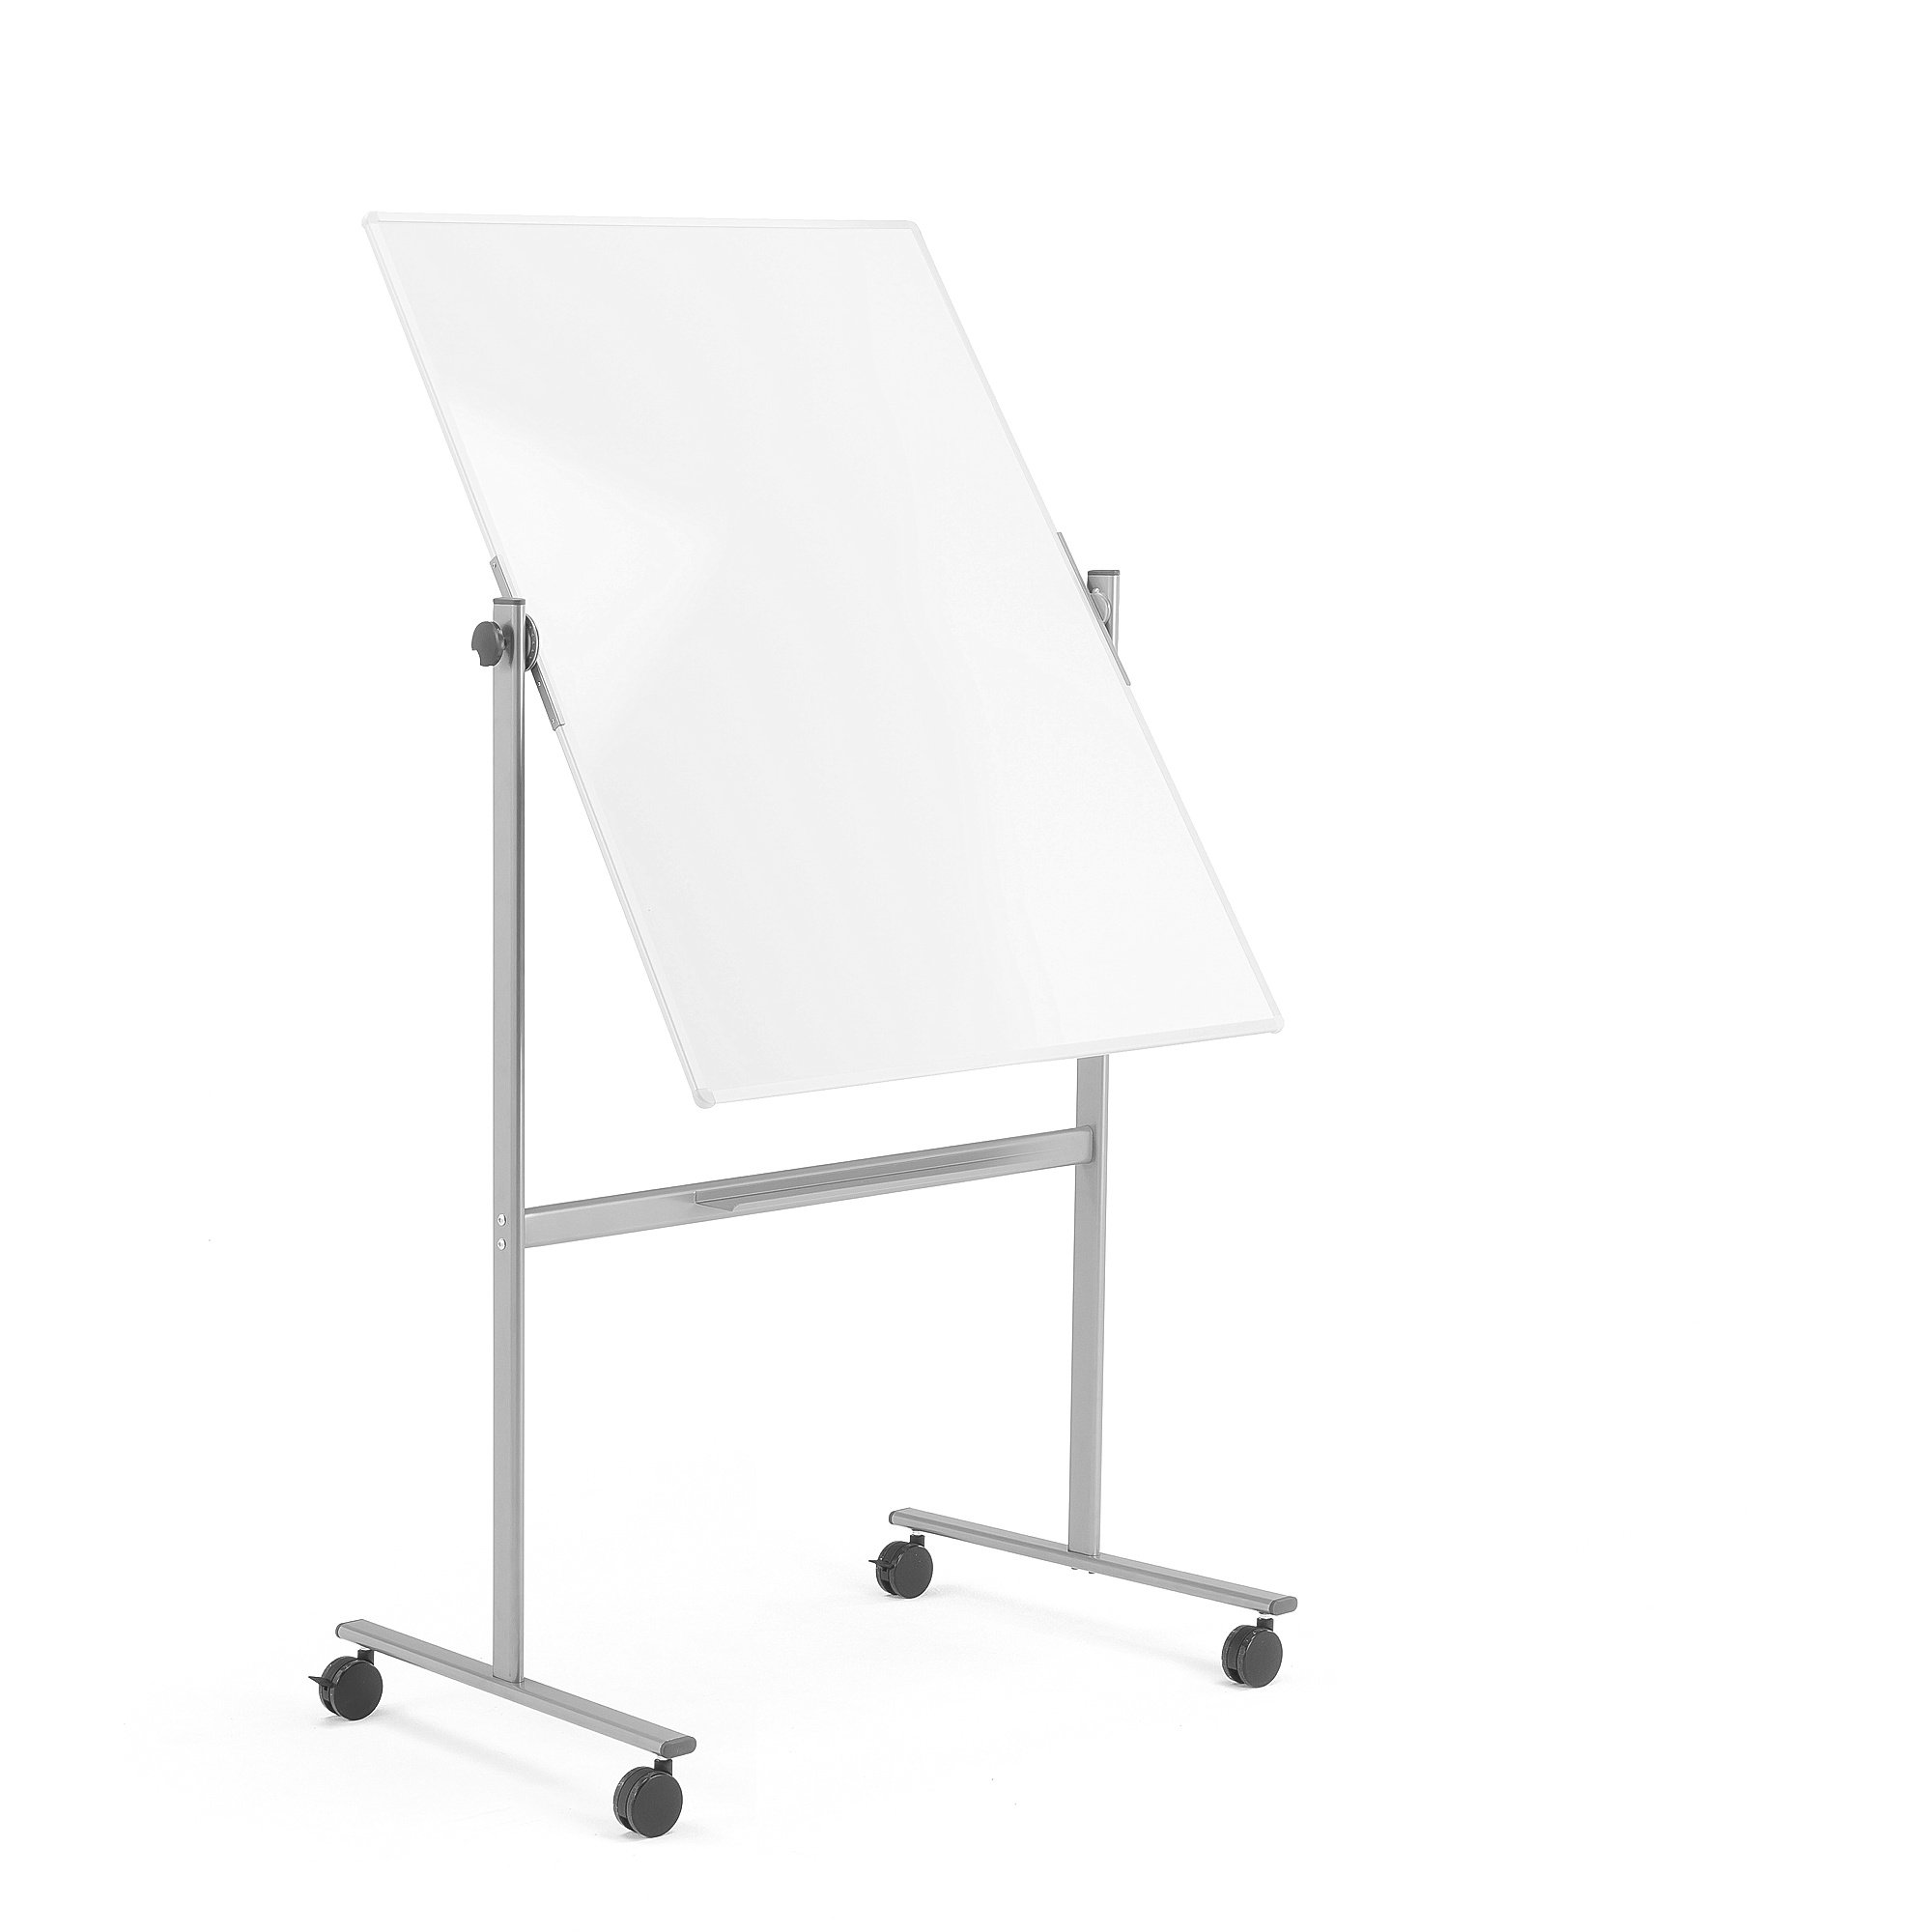 E-shop Biela magnetická tabuľa s kolieskami DORIS, obojstranná, 1000x1200 mm